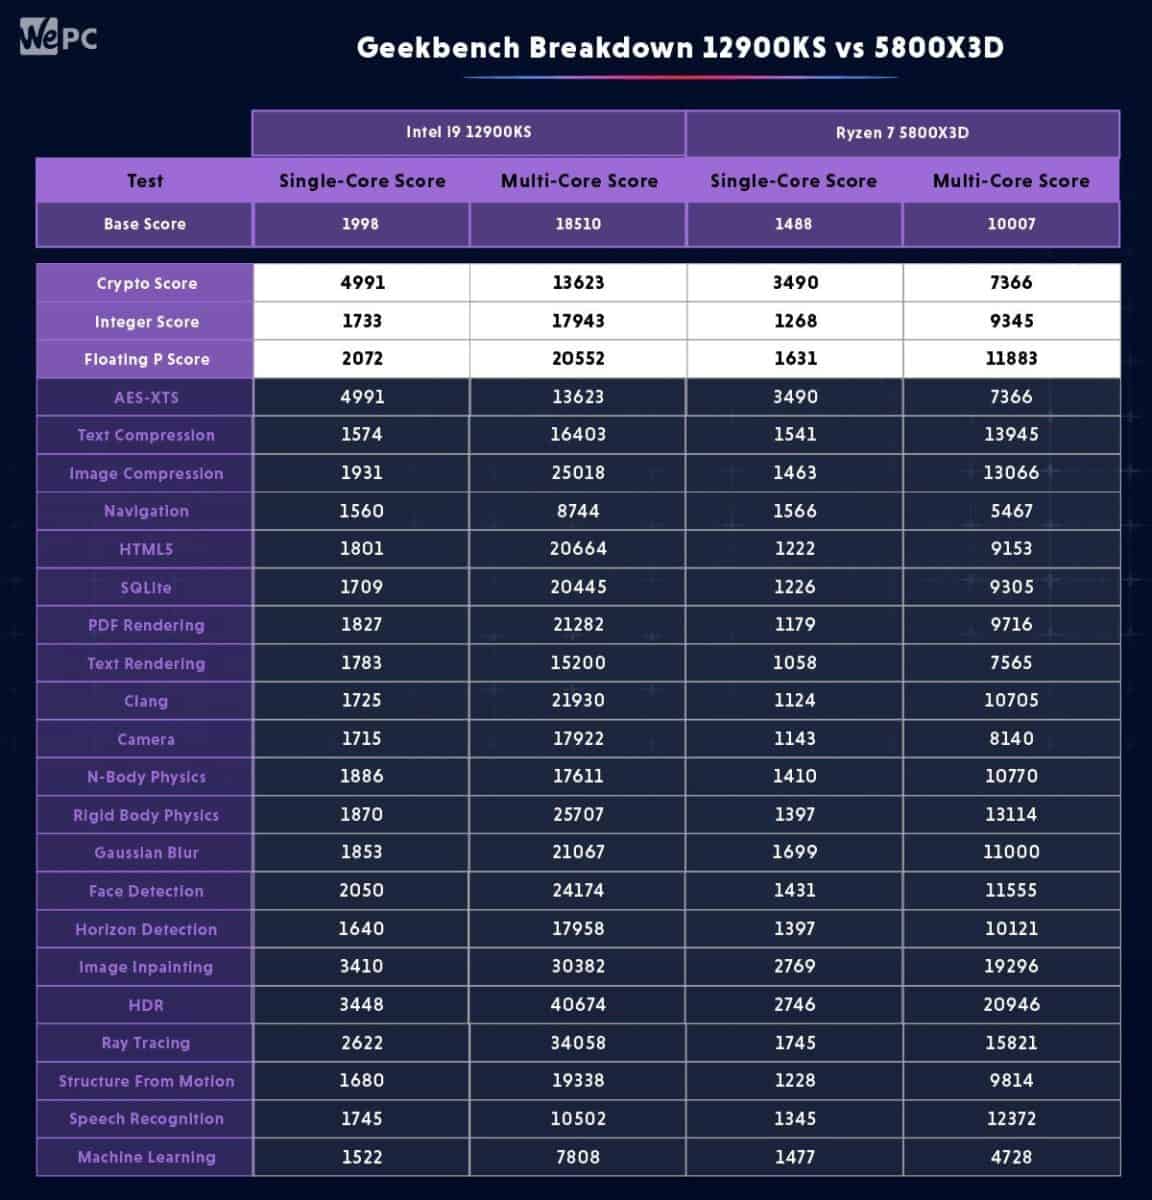 Geekbench Breakdown 12900ks vs 5800x3d 5800X3D review